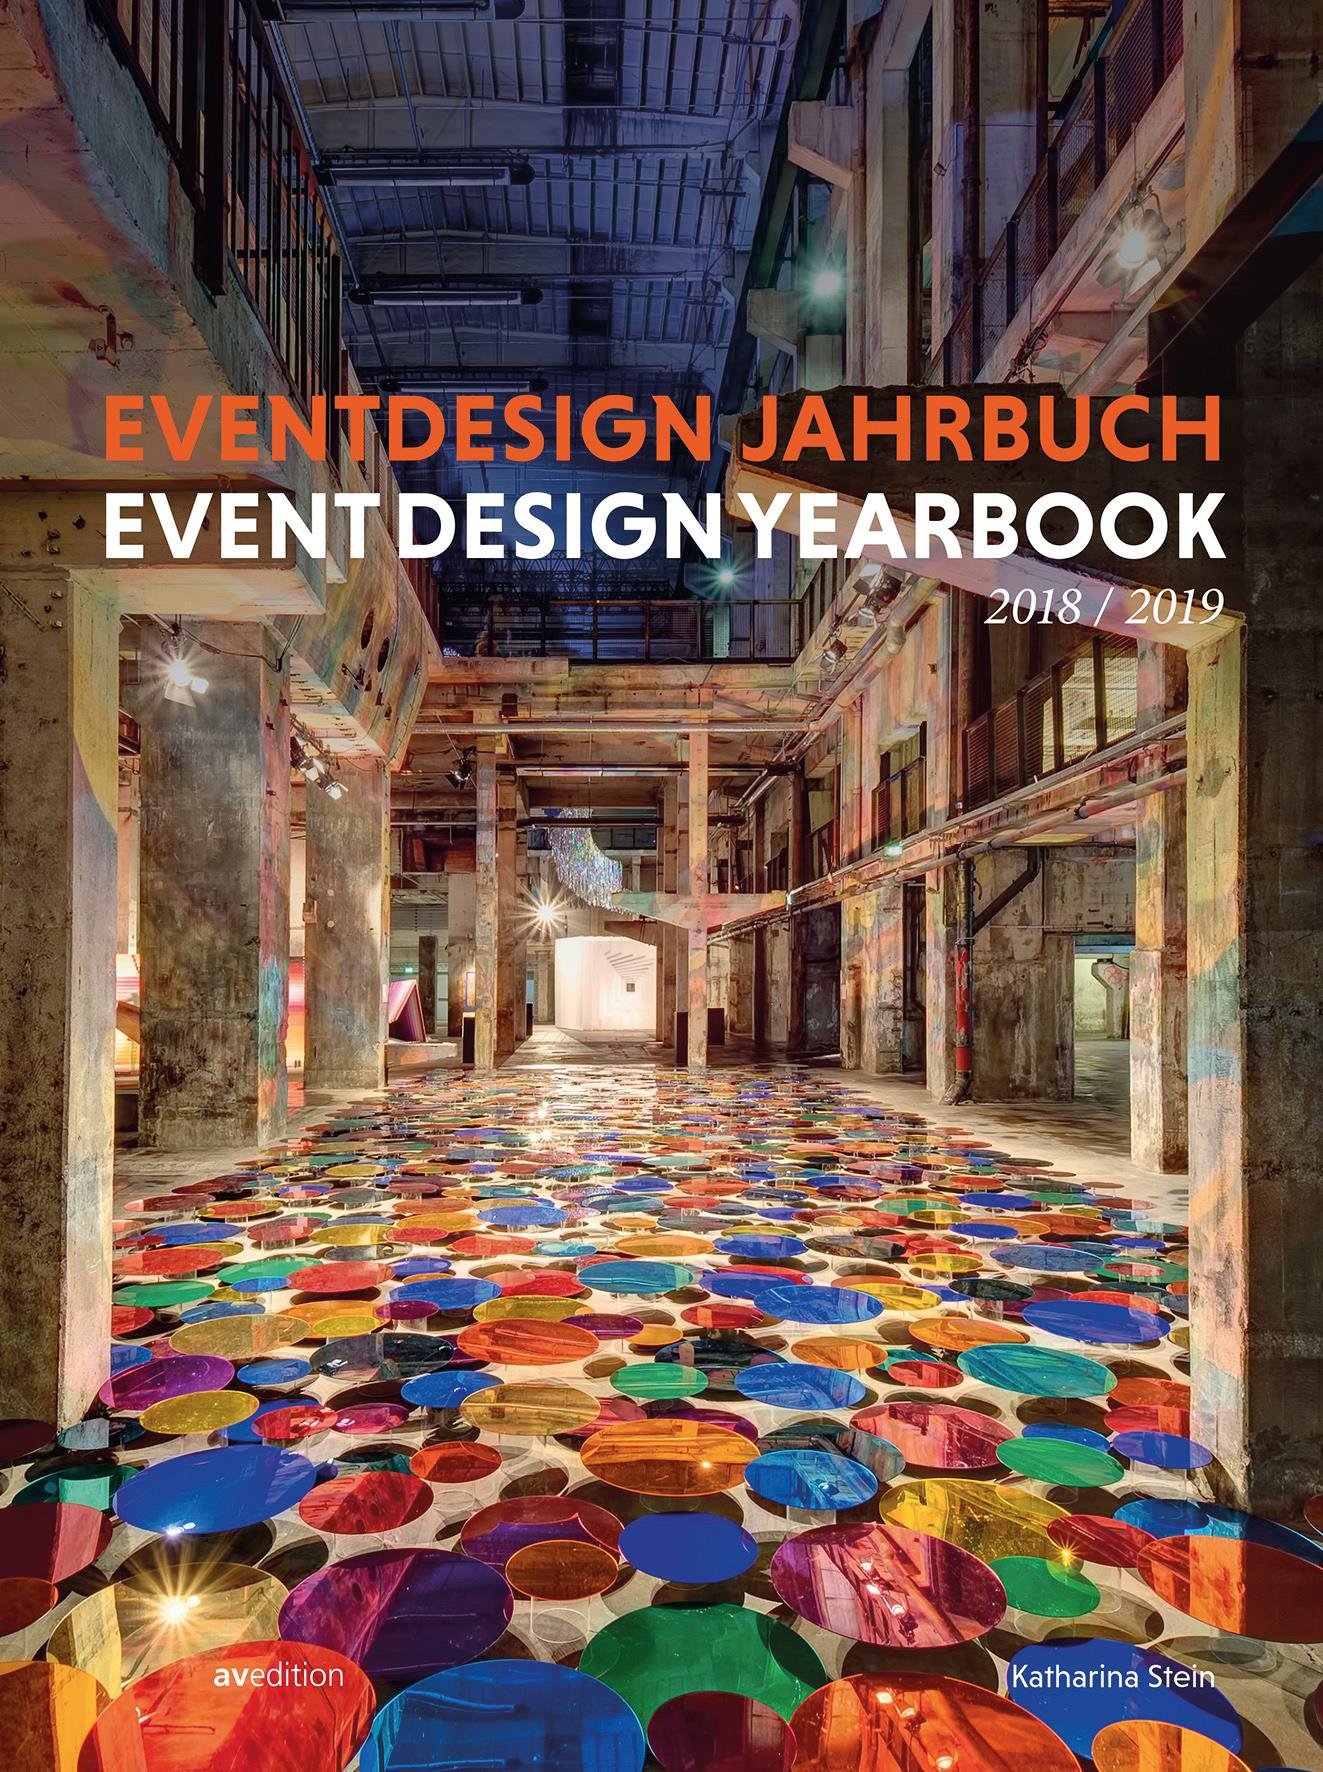 Eventdesign Jahrbuch 2018 / 2019 (Event Design Yearbook) 
